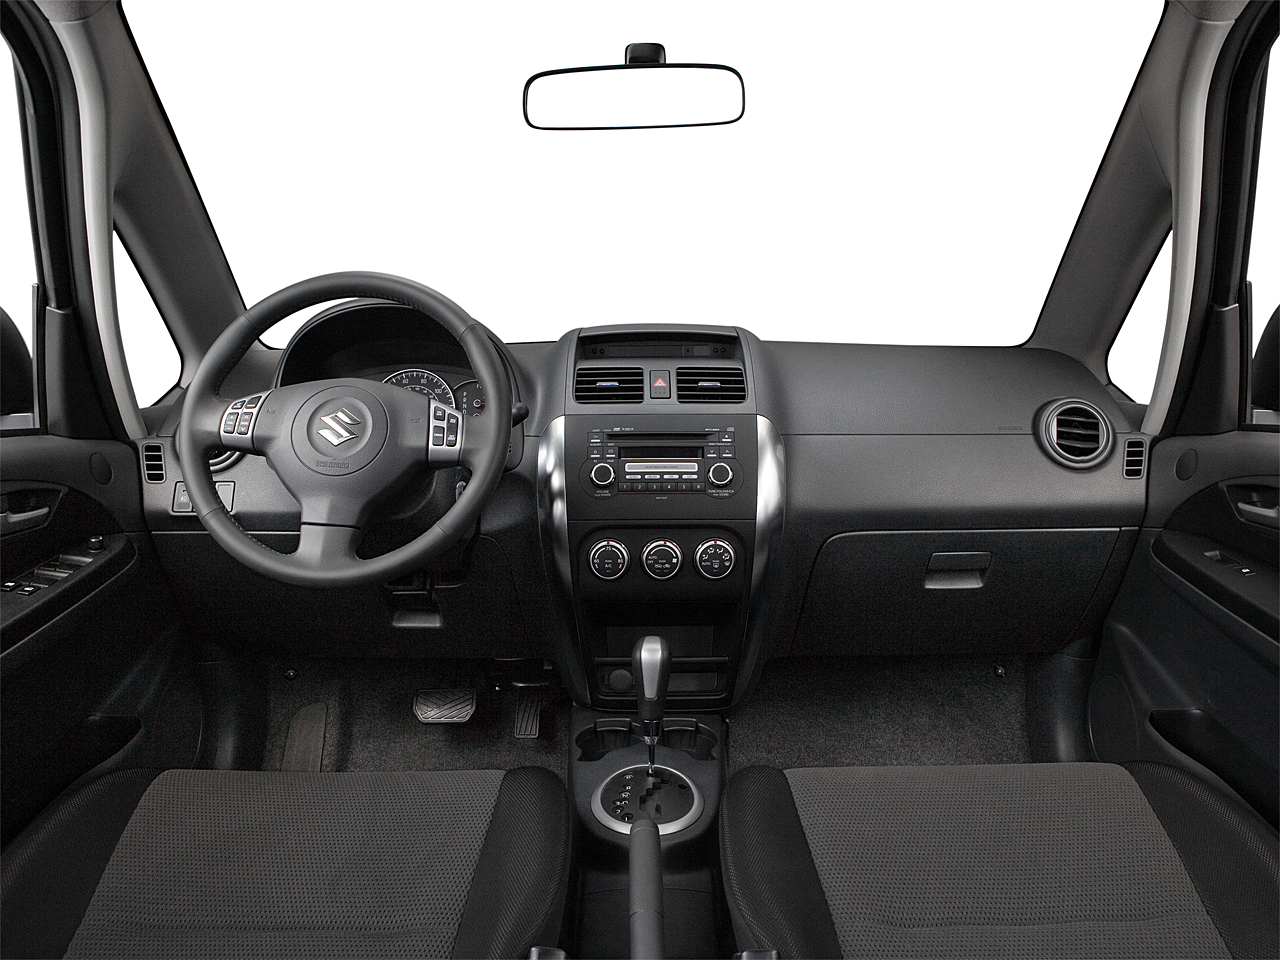 2008 Suzuki SX4 Sport 4dr Sedan 4A w/Convenience Package - Research -  GrooveCar